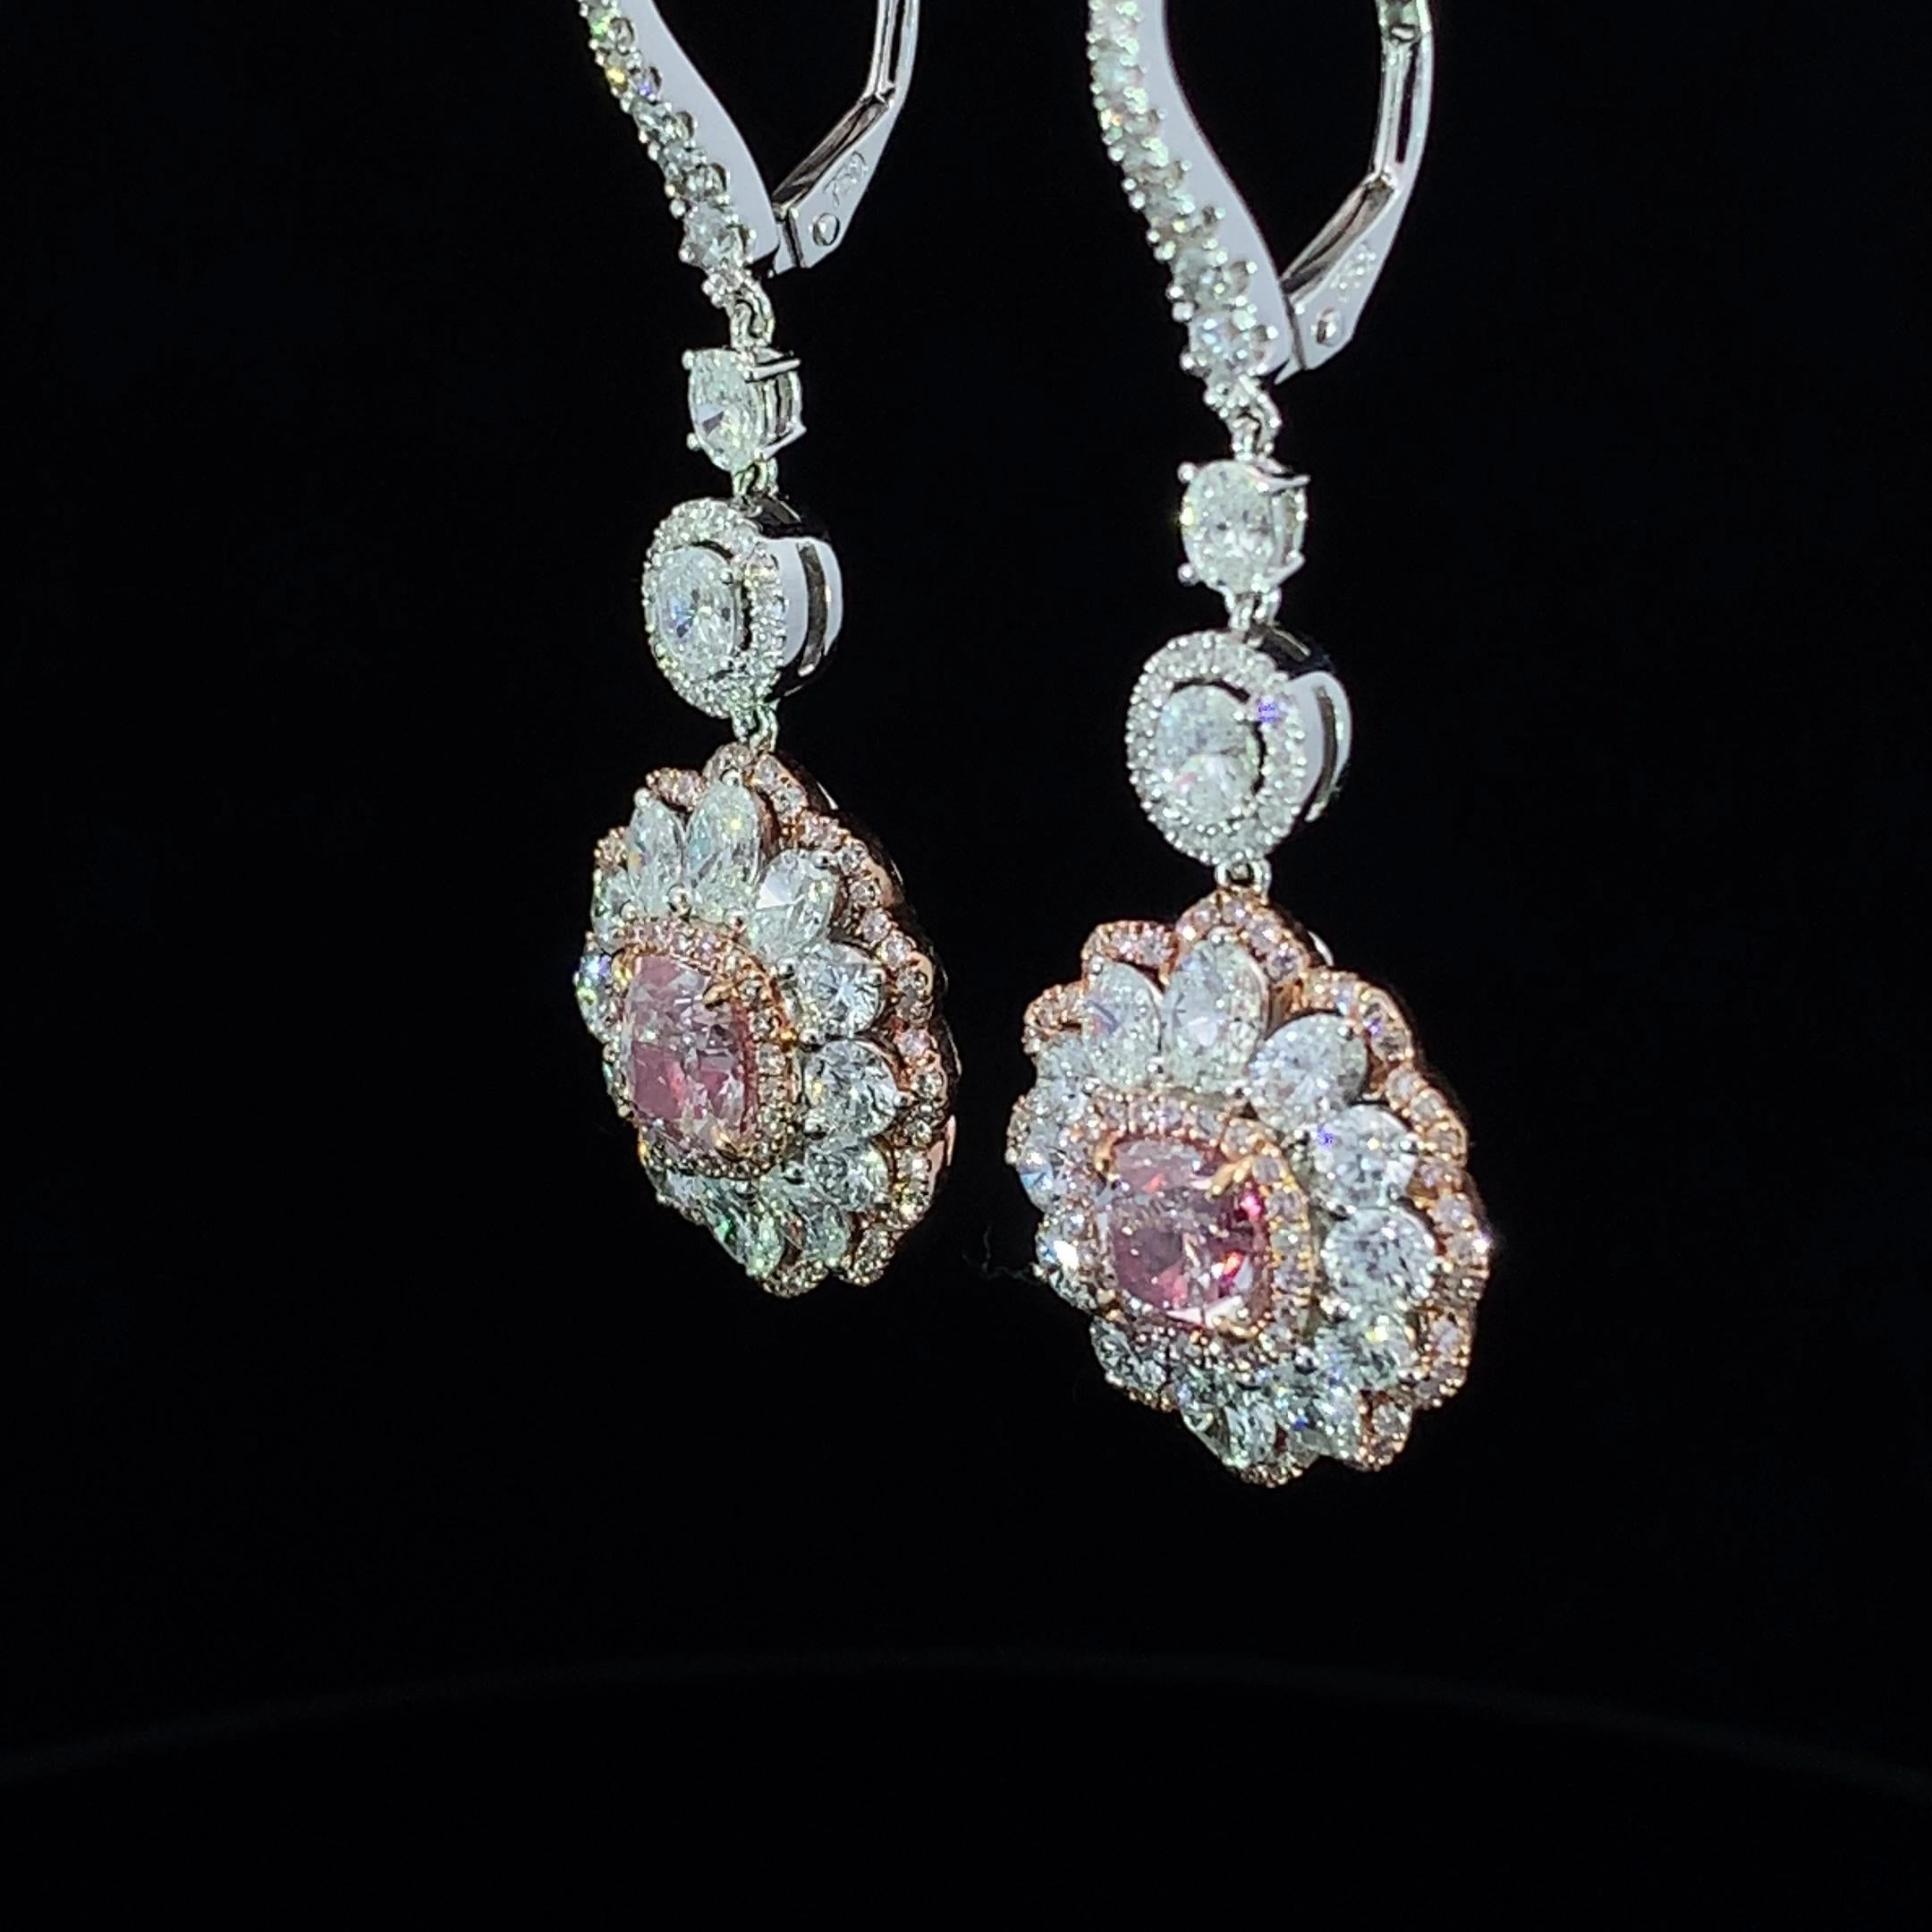 Modern GIA 2.01 Carat Very Light Pink & White Diamond Drop Earrings in 18K Gold